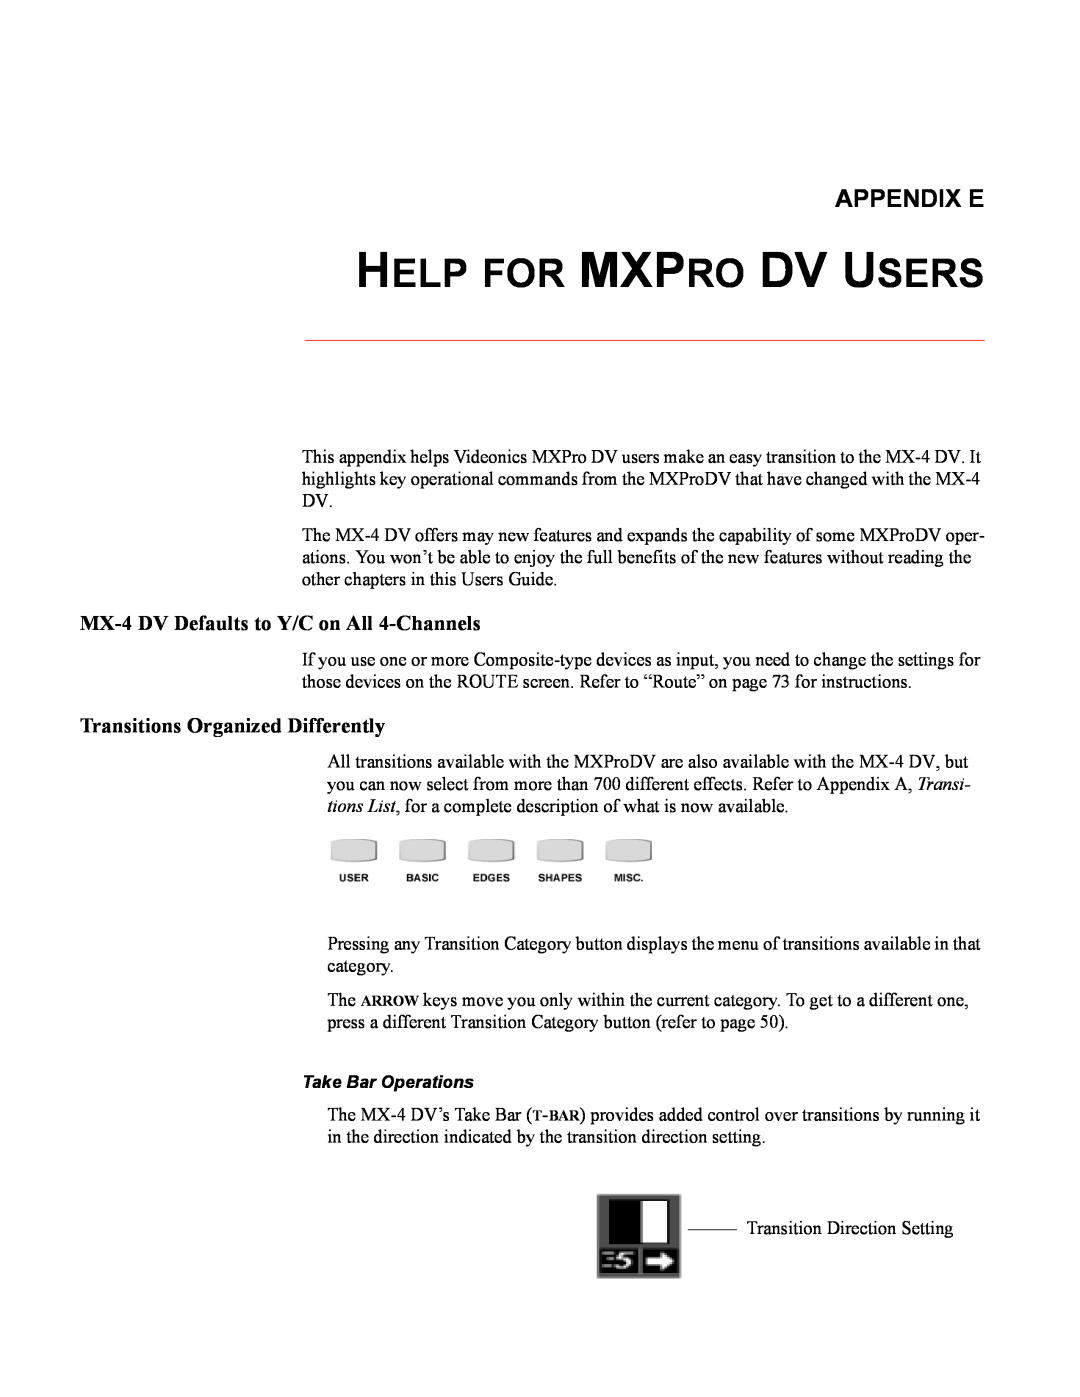 FOCUS Enhancements MX-4DV manual Help For Mxpro Dv Users, Appendix E, MX-4 DV Defaults to Y/C on All 4-Channels 